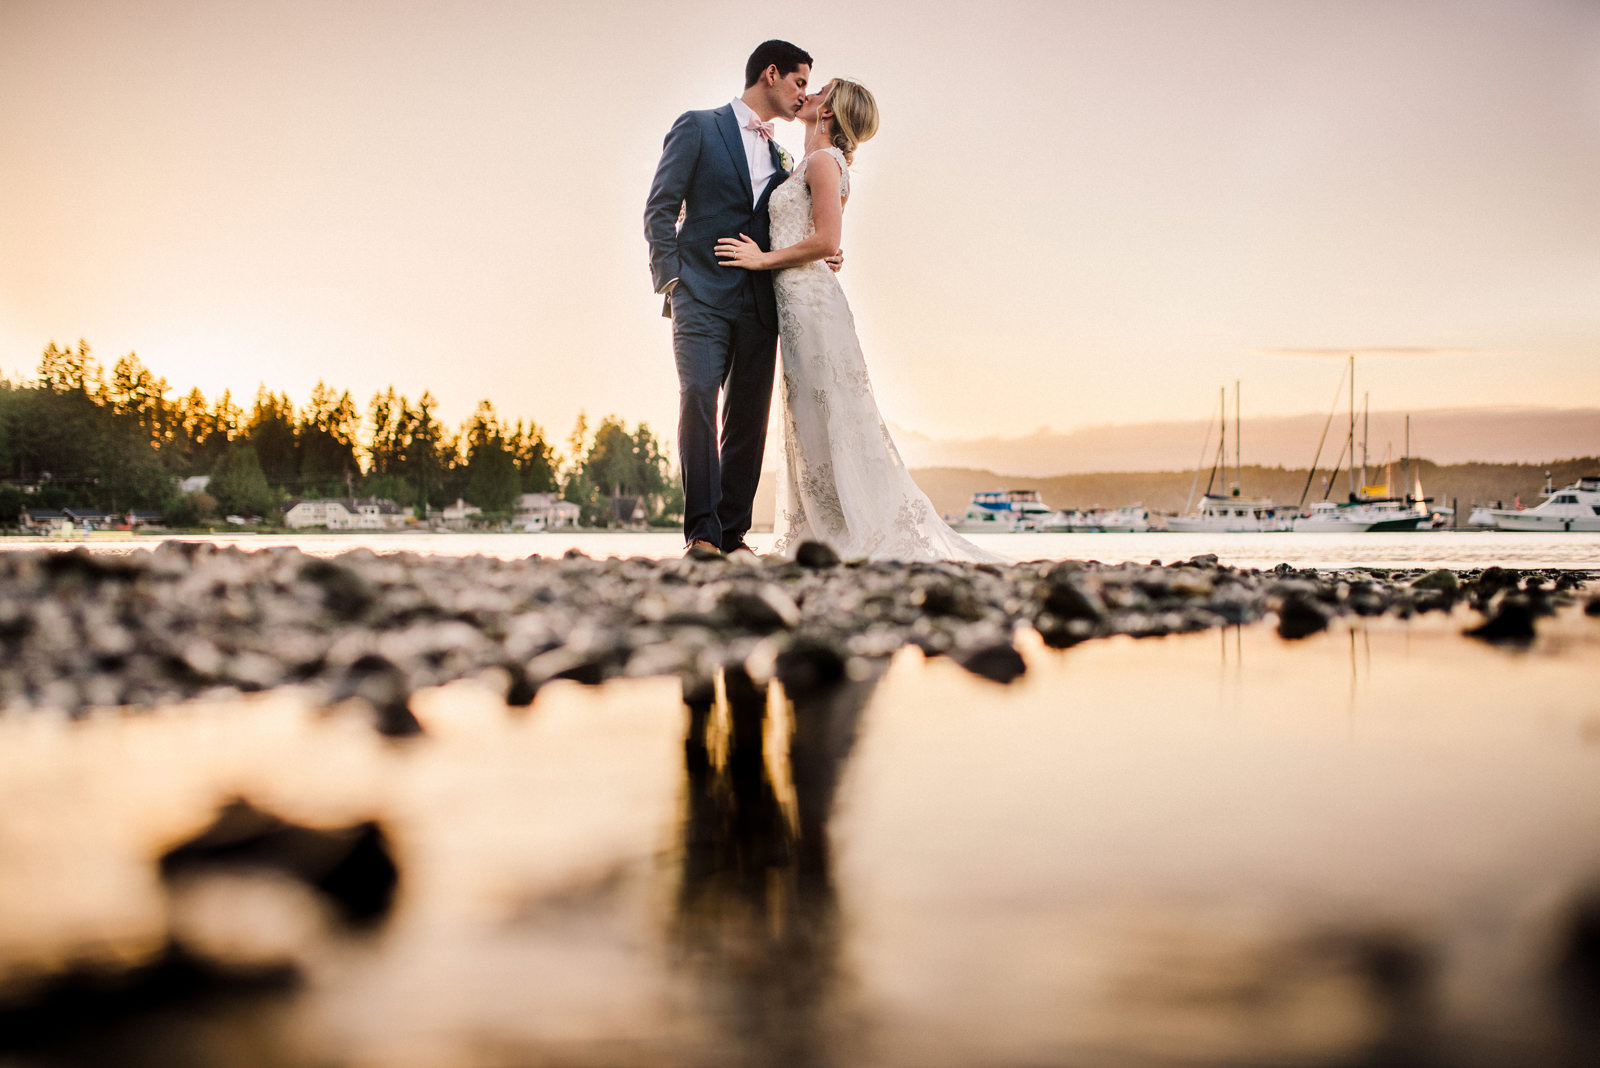 124-alderbrook-resort-sunset-wedding-portrait-by-washington-fine-art-photographer.jpg